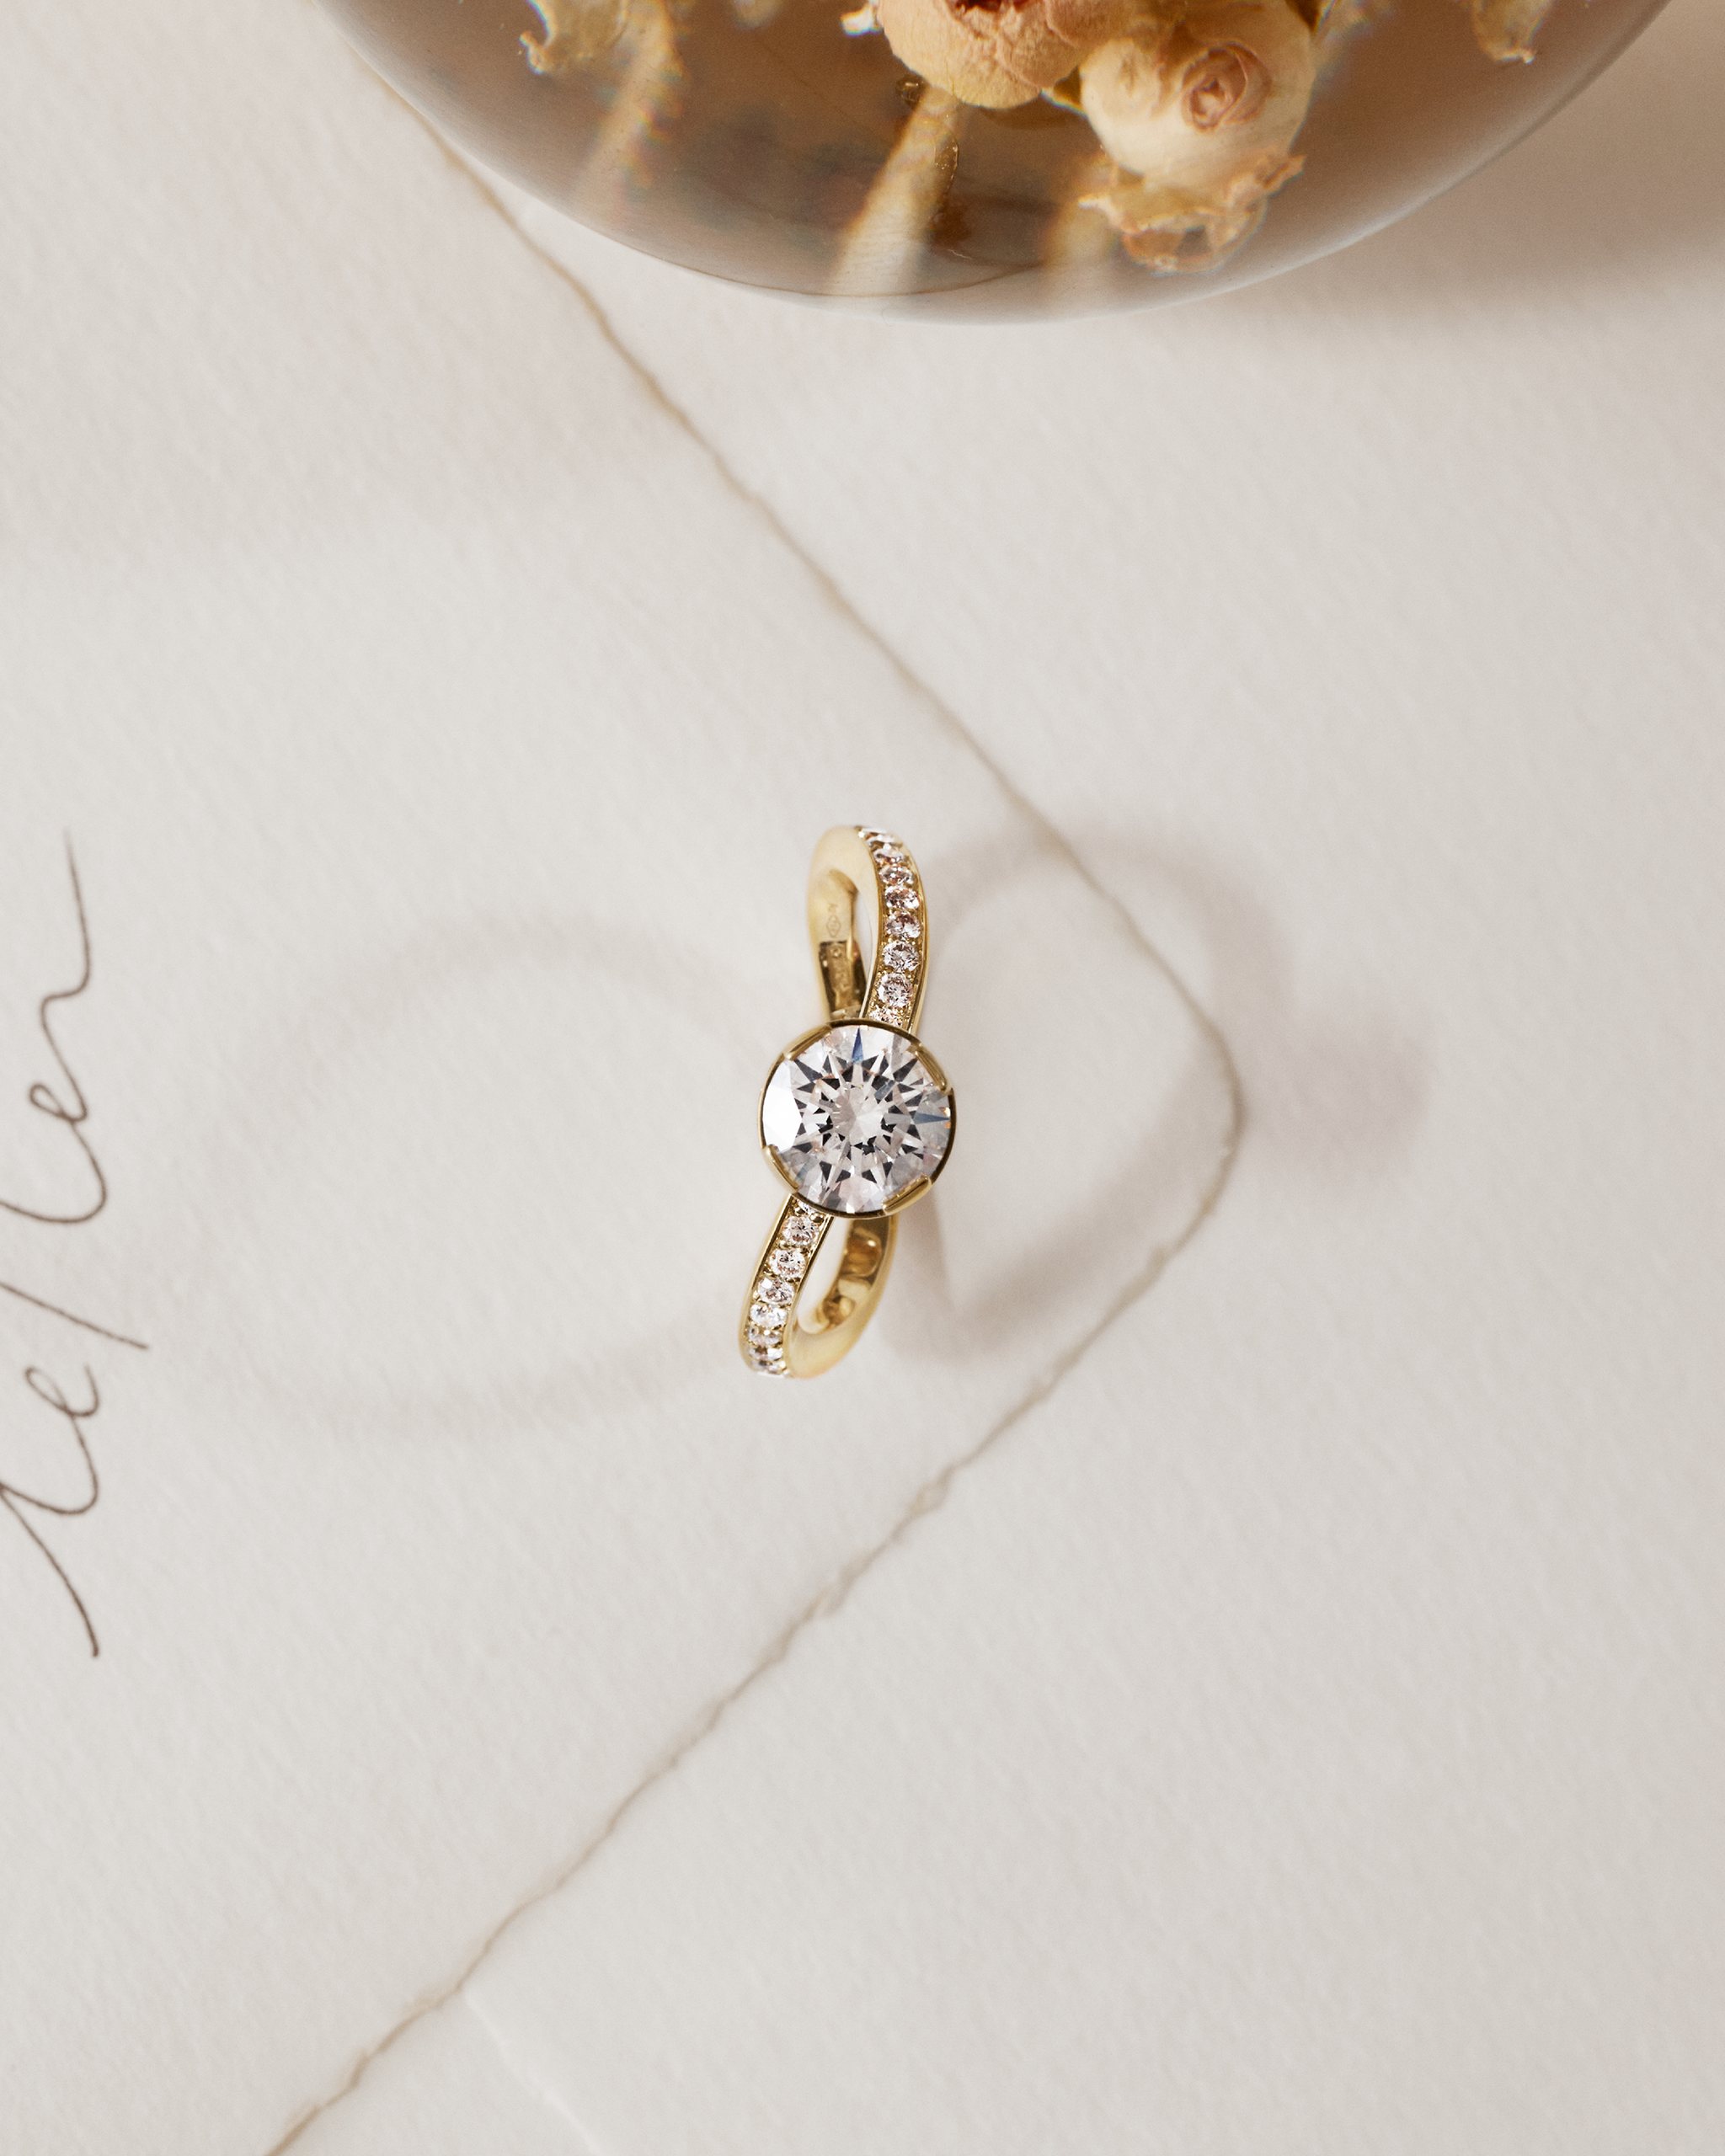 Toi Diamond engagement ring on white background